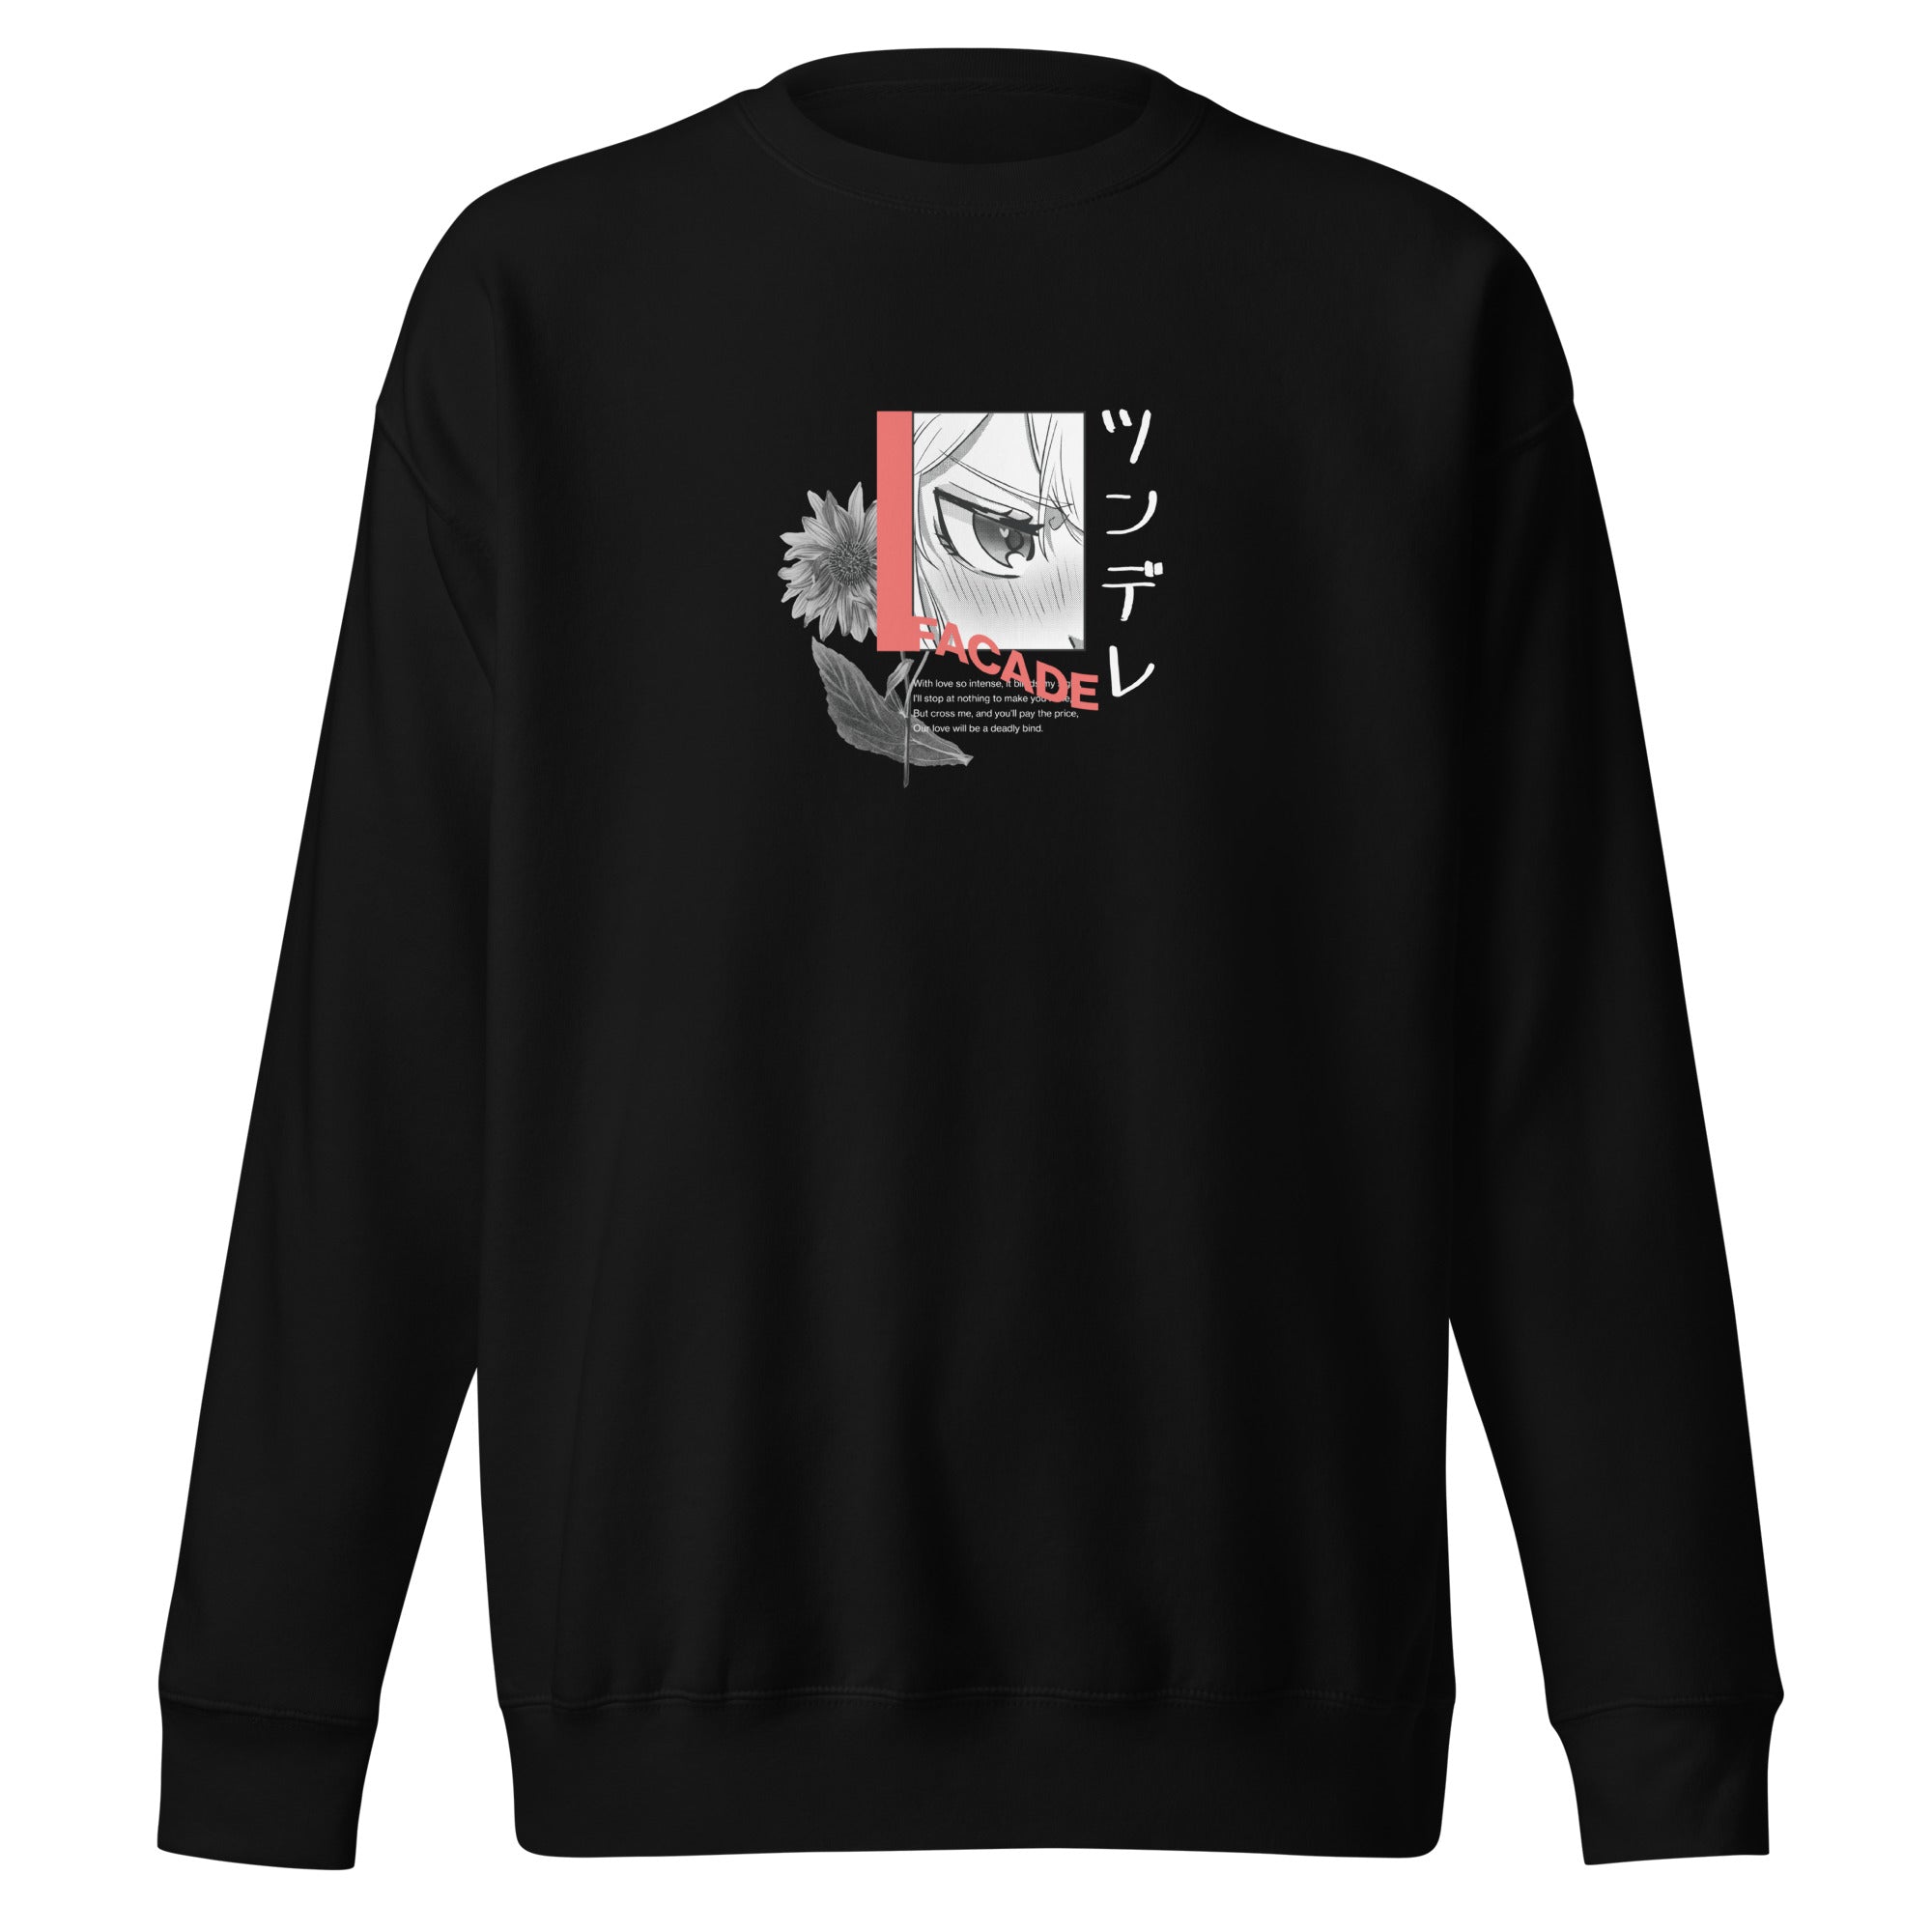 FACADE • anime sweatshirt - Jackler - anime-inspired streetwear - anime clothing